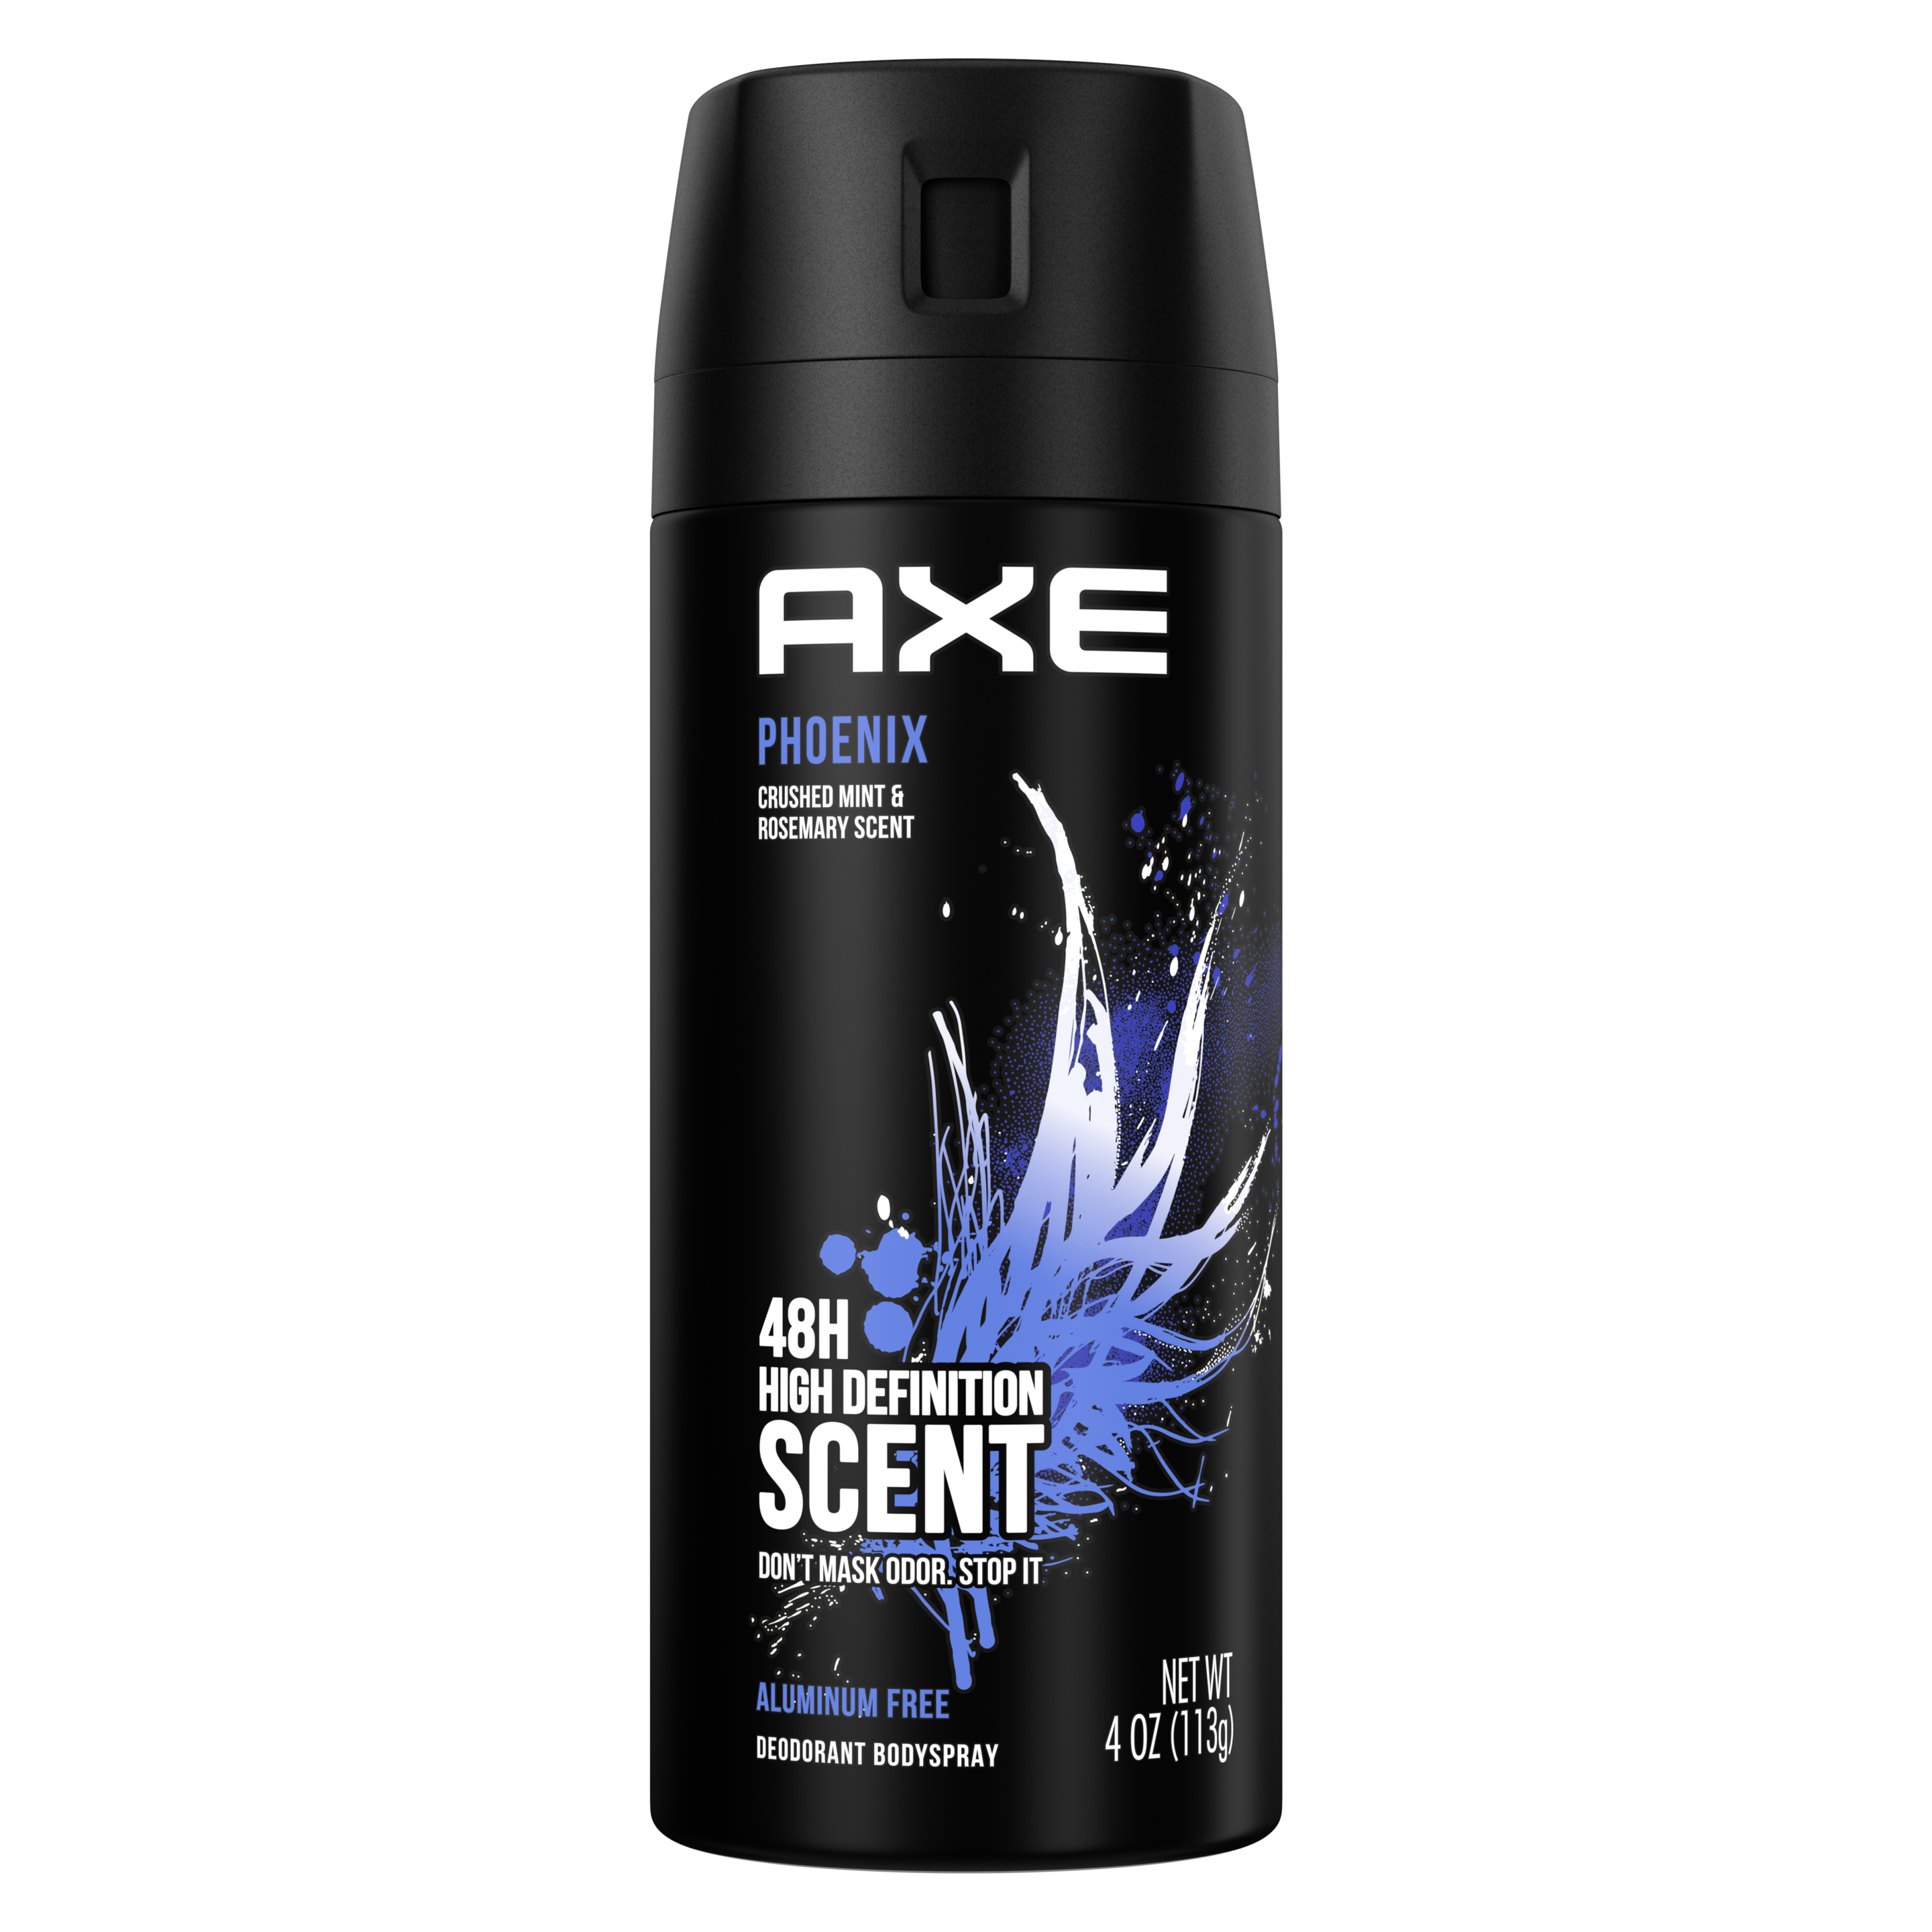 Phoenix Deodorant Body Spray